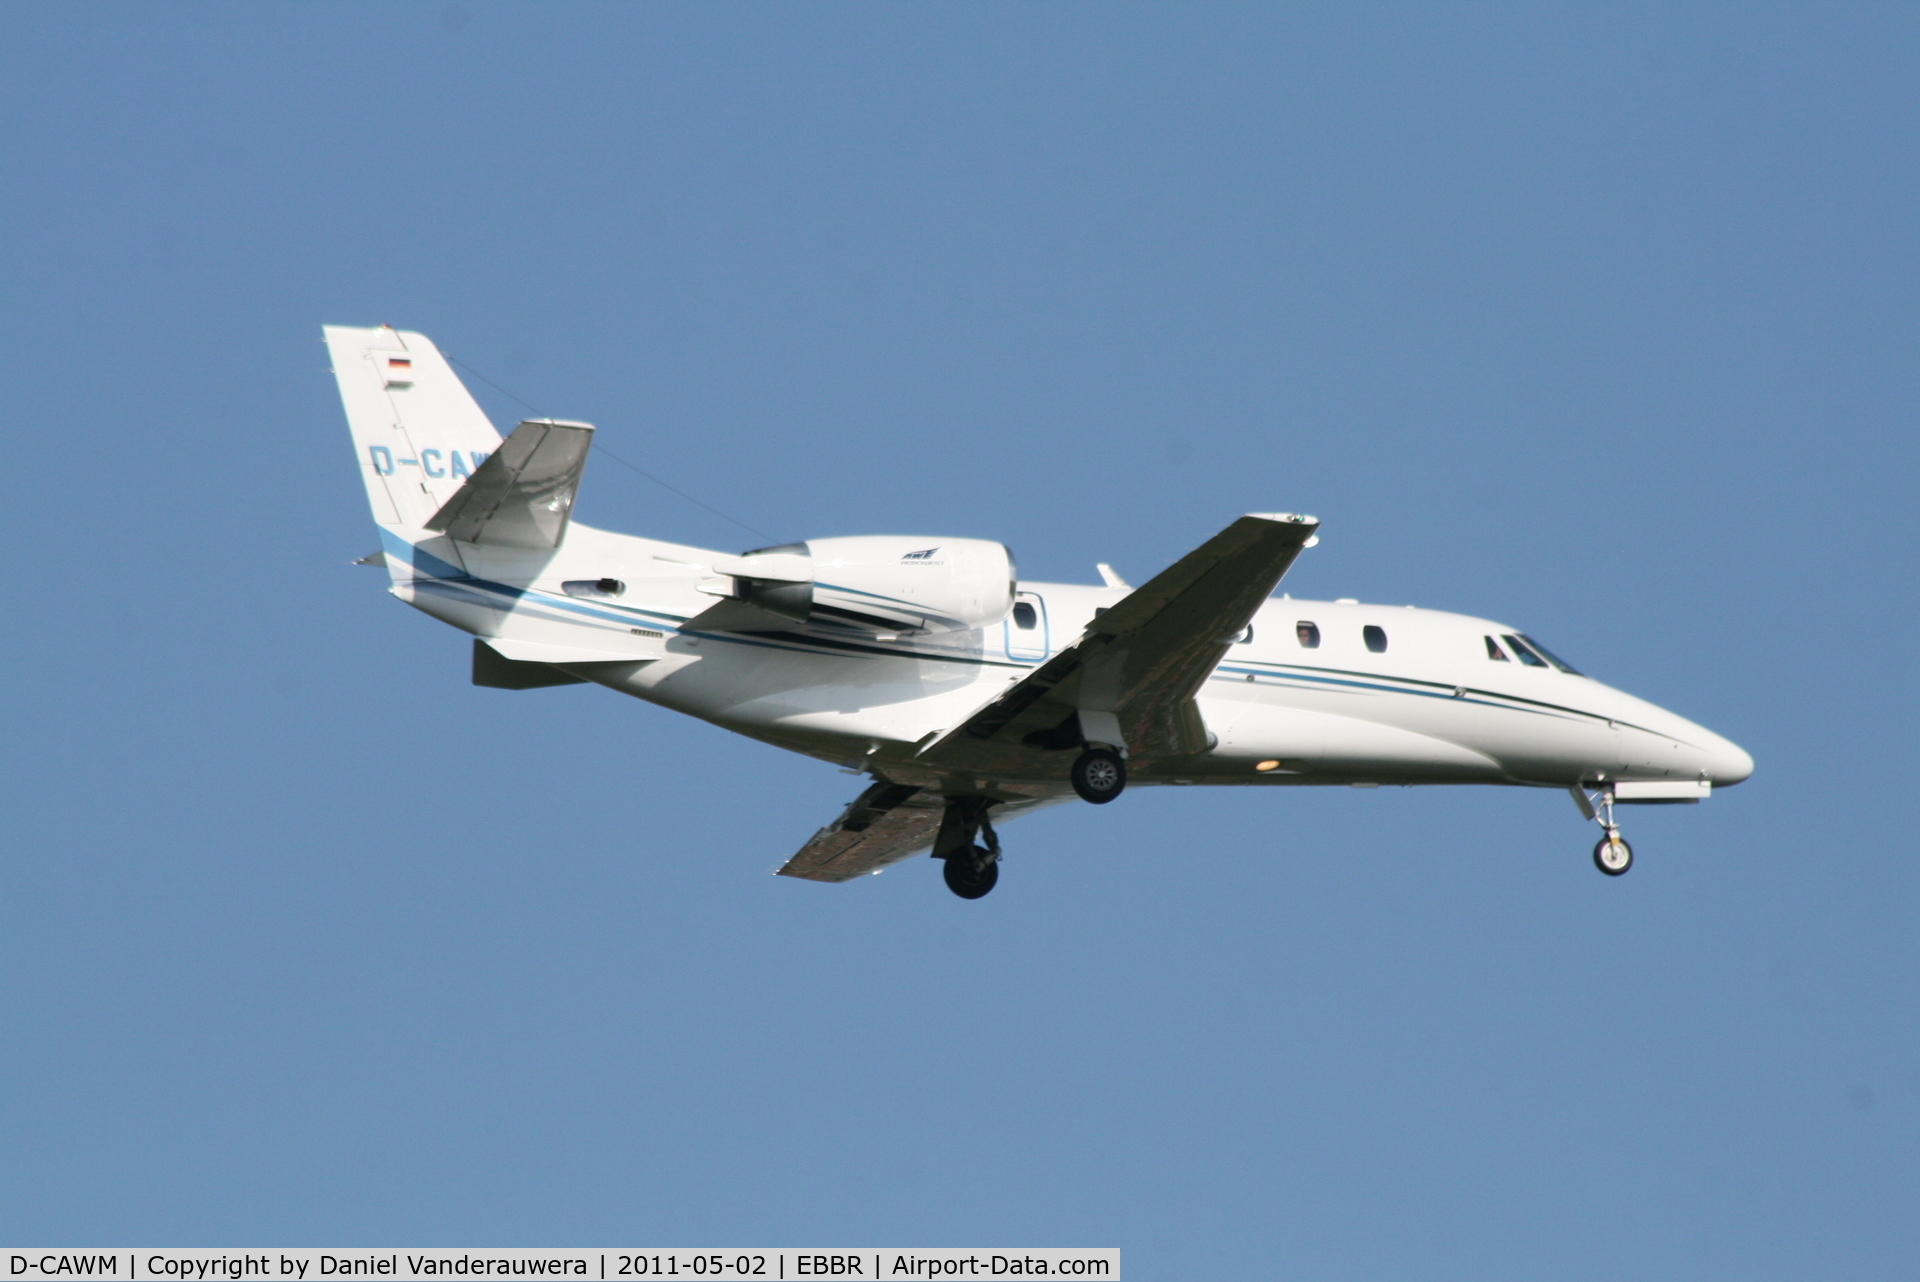 D-CAWM, 2008 Cessna 560 Citation XLS+ C/N 560-6002, Descending to RWY 02